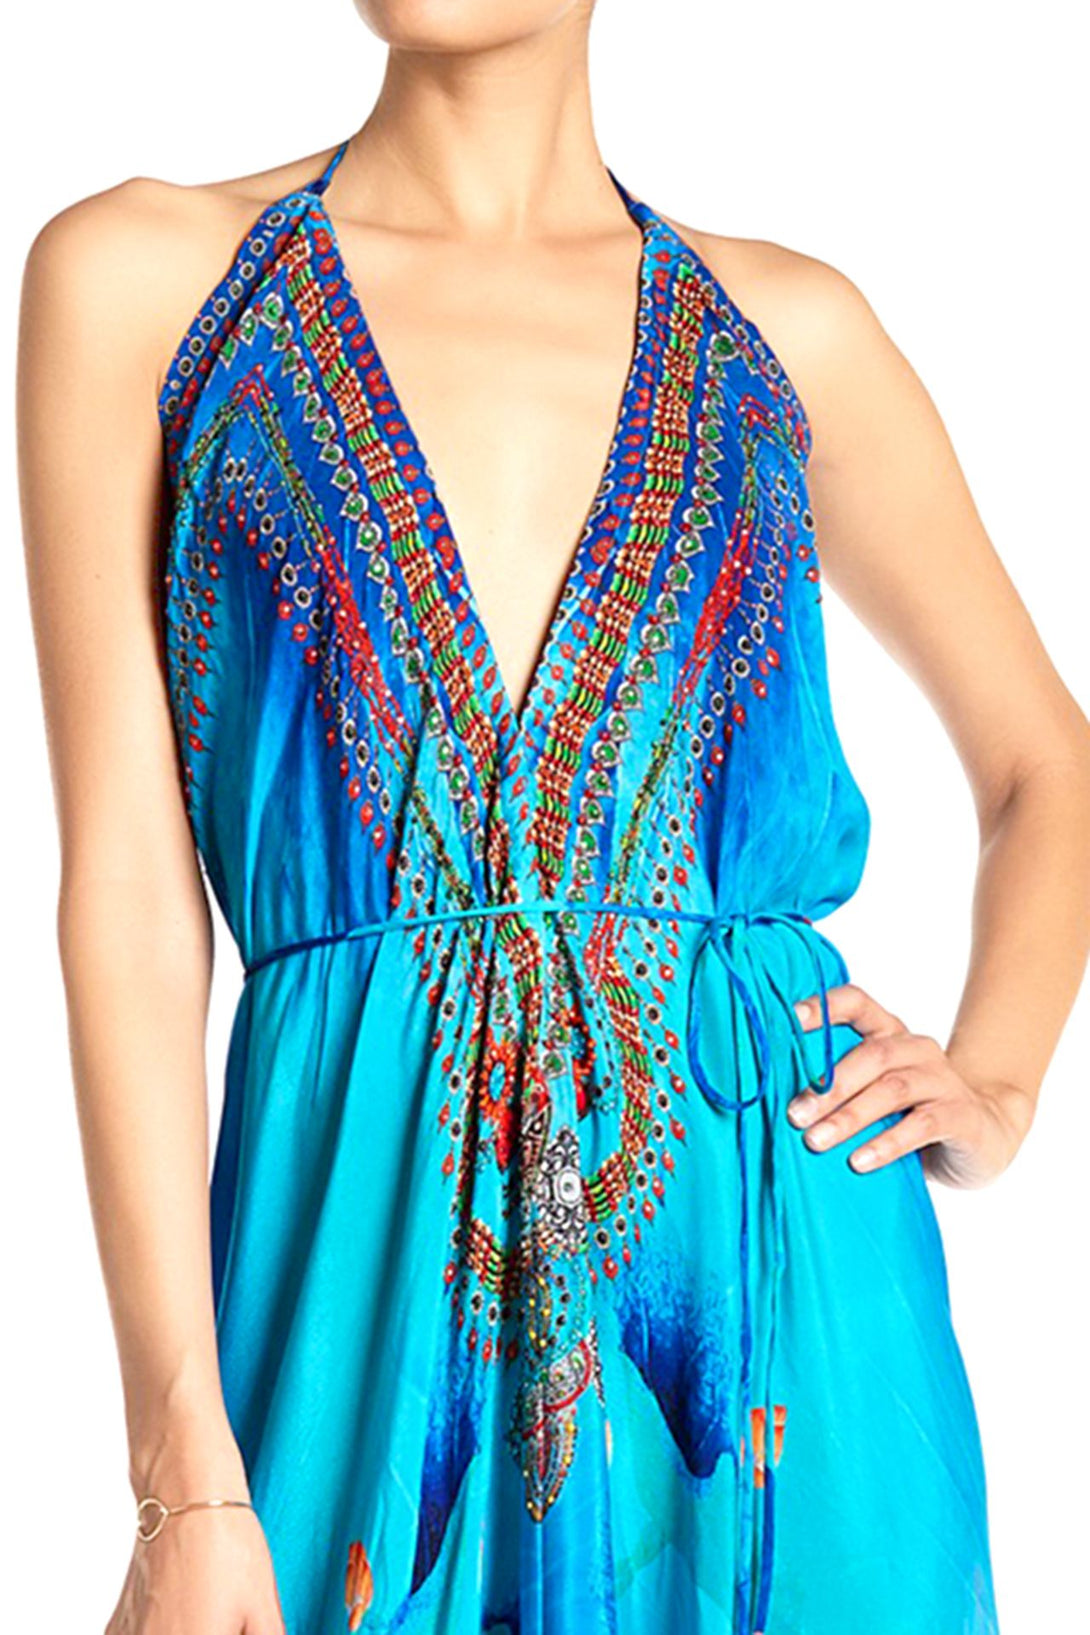  navy blue maxi dress, Shahida Parides, beach maxi dress, long summer dresses, backless maxi dress,